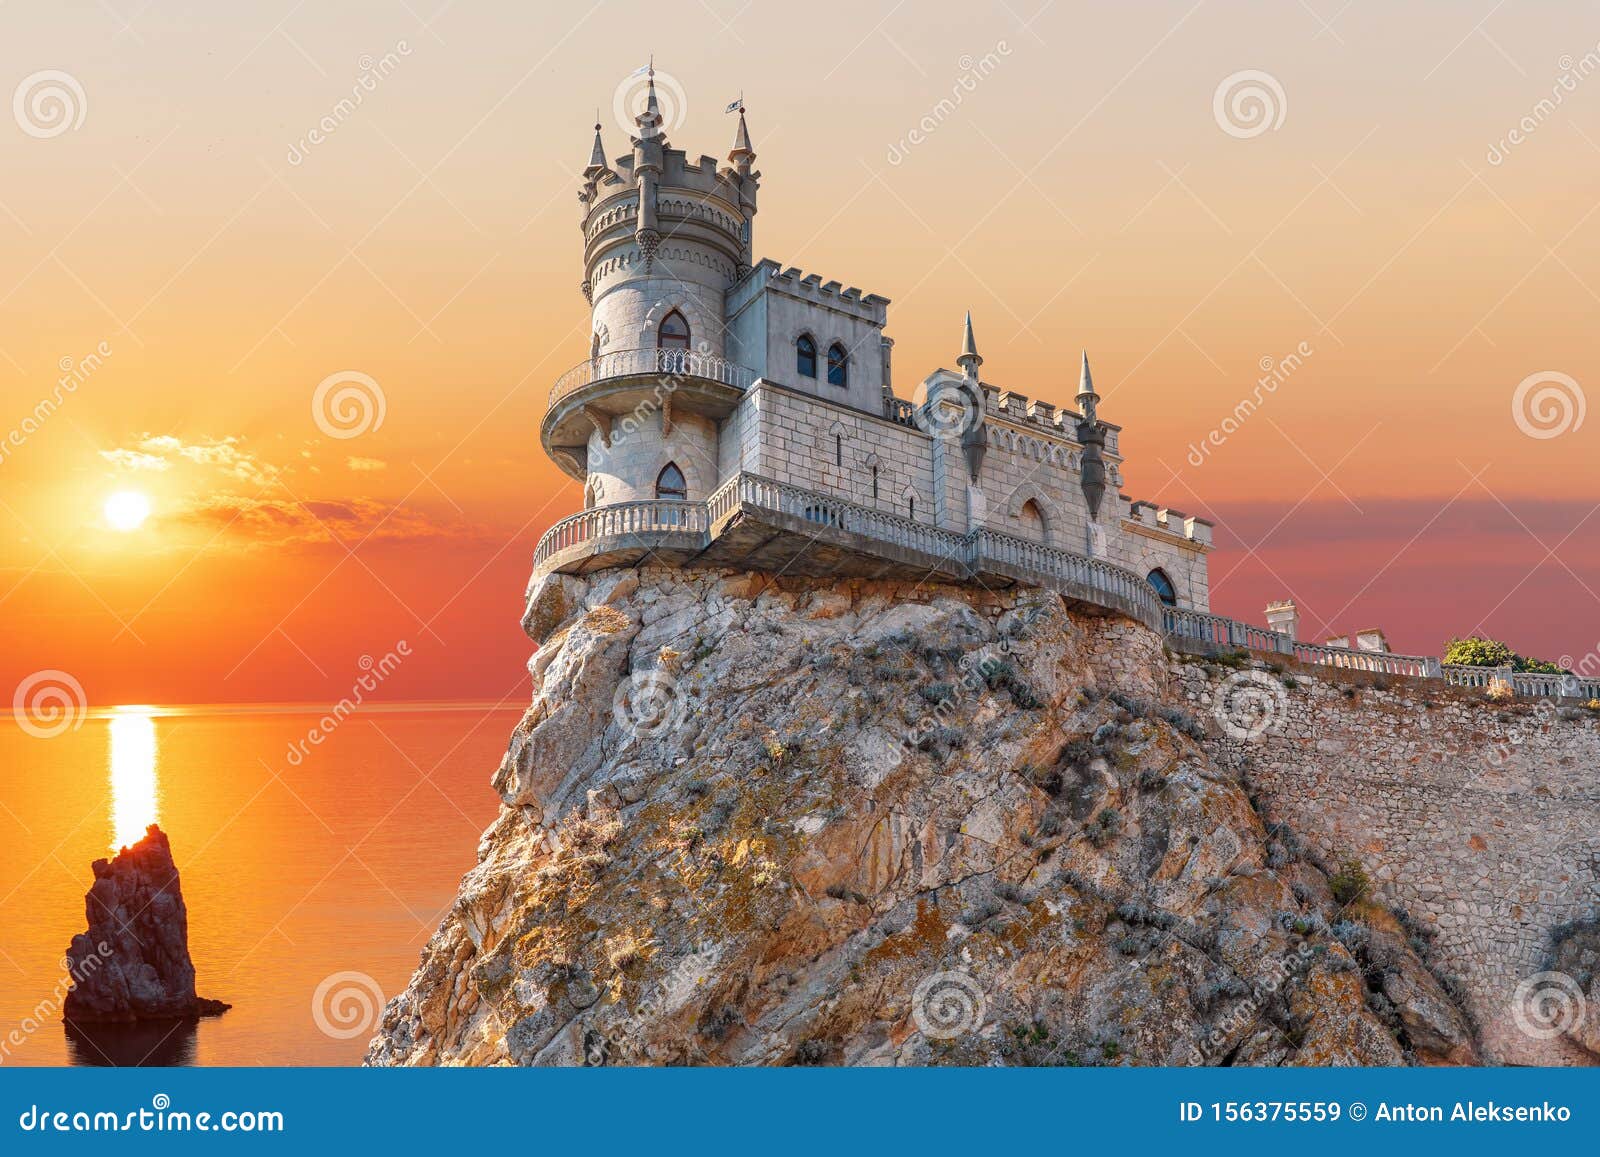 swallow nest castle in crimea, beautiful sunset view